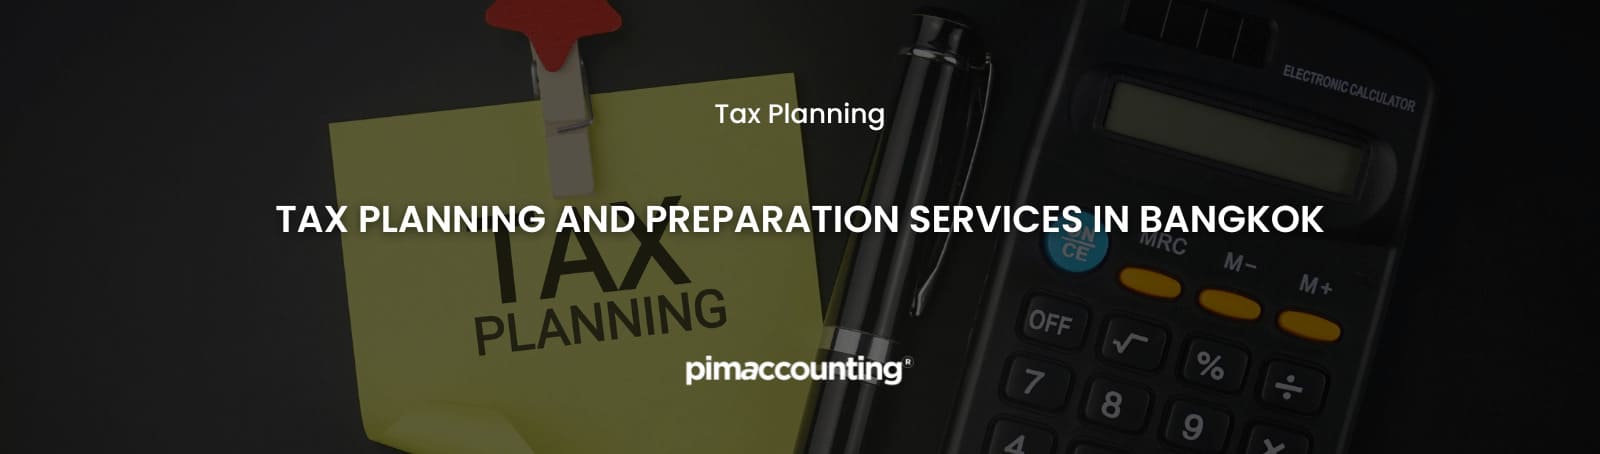 tax planning - pimaccounting